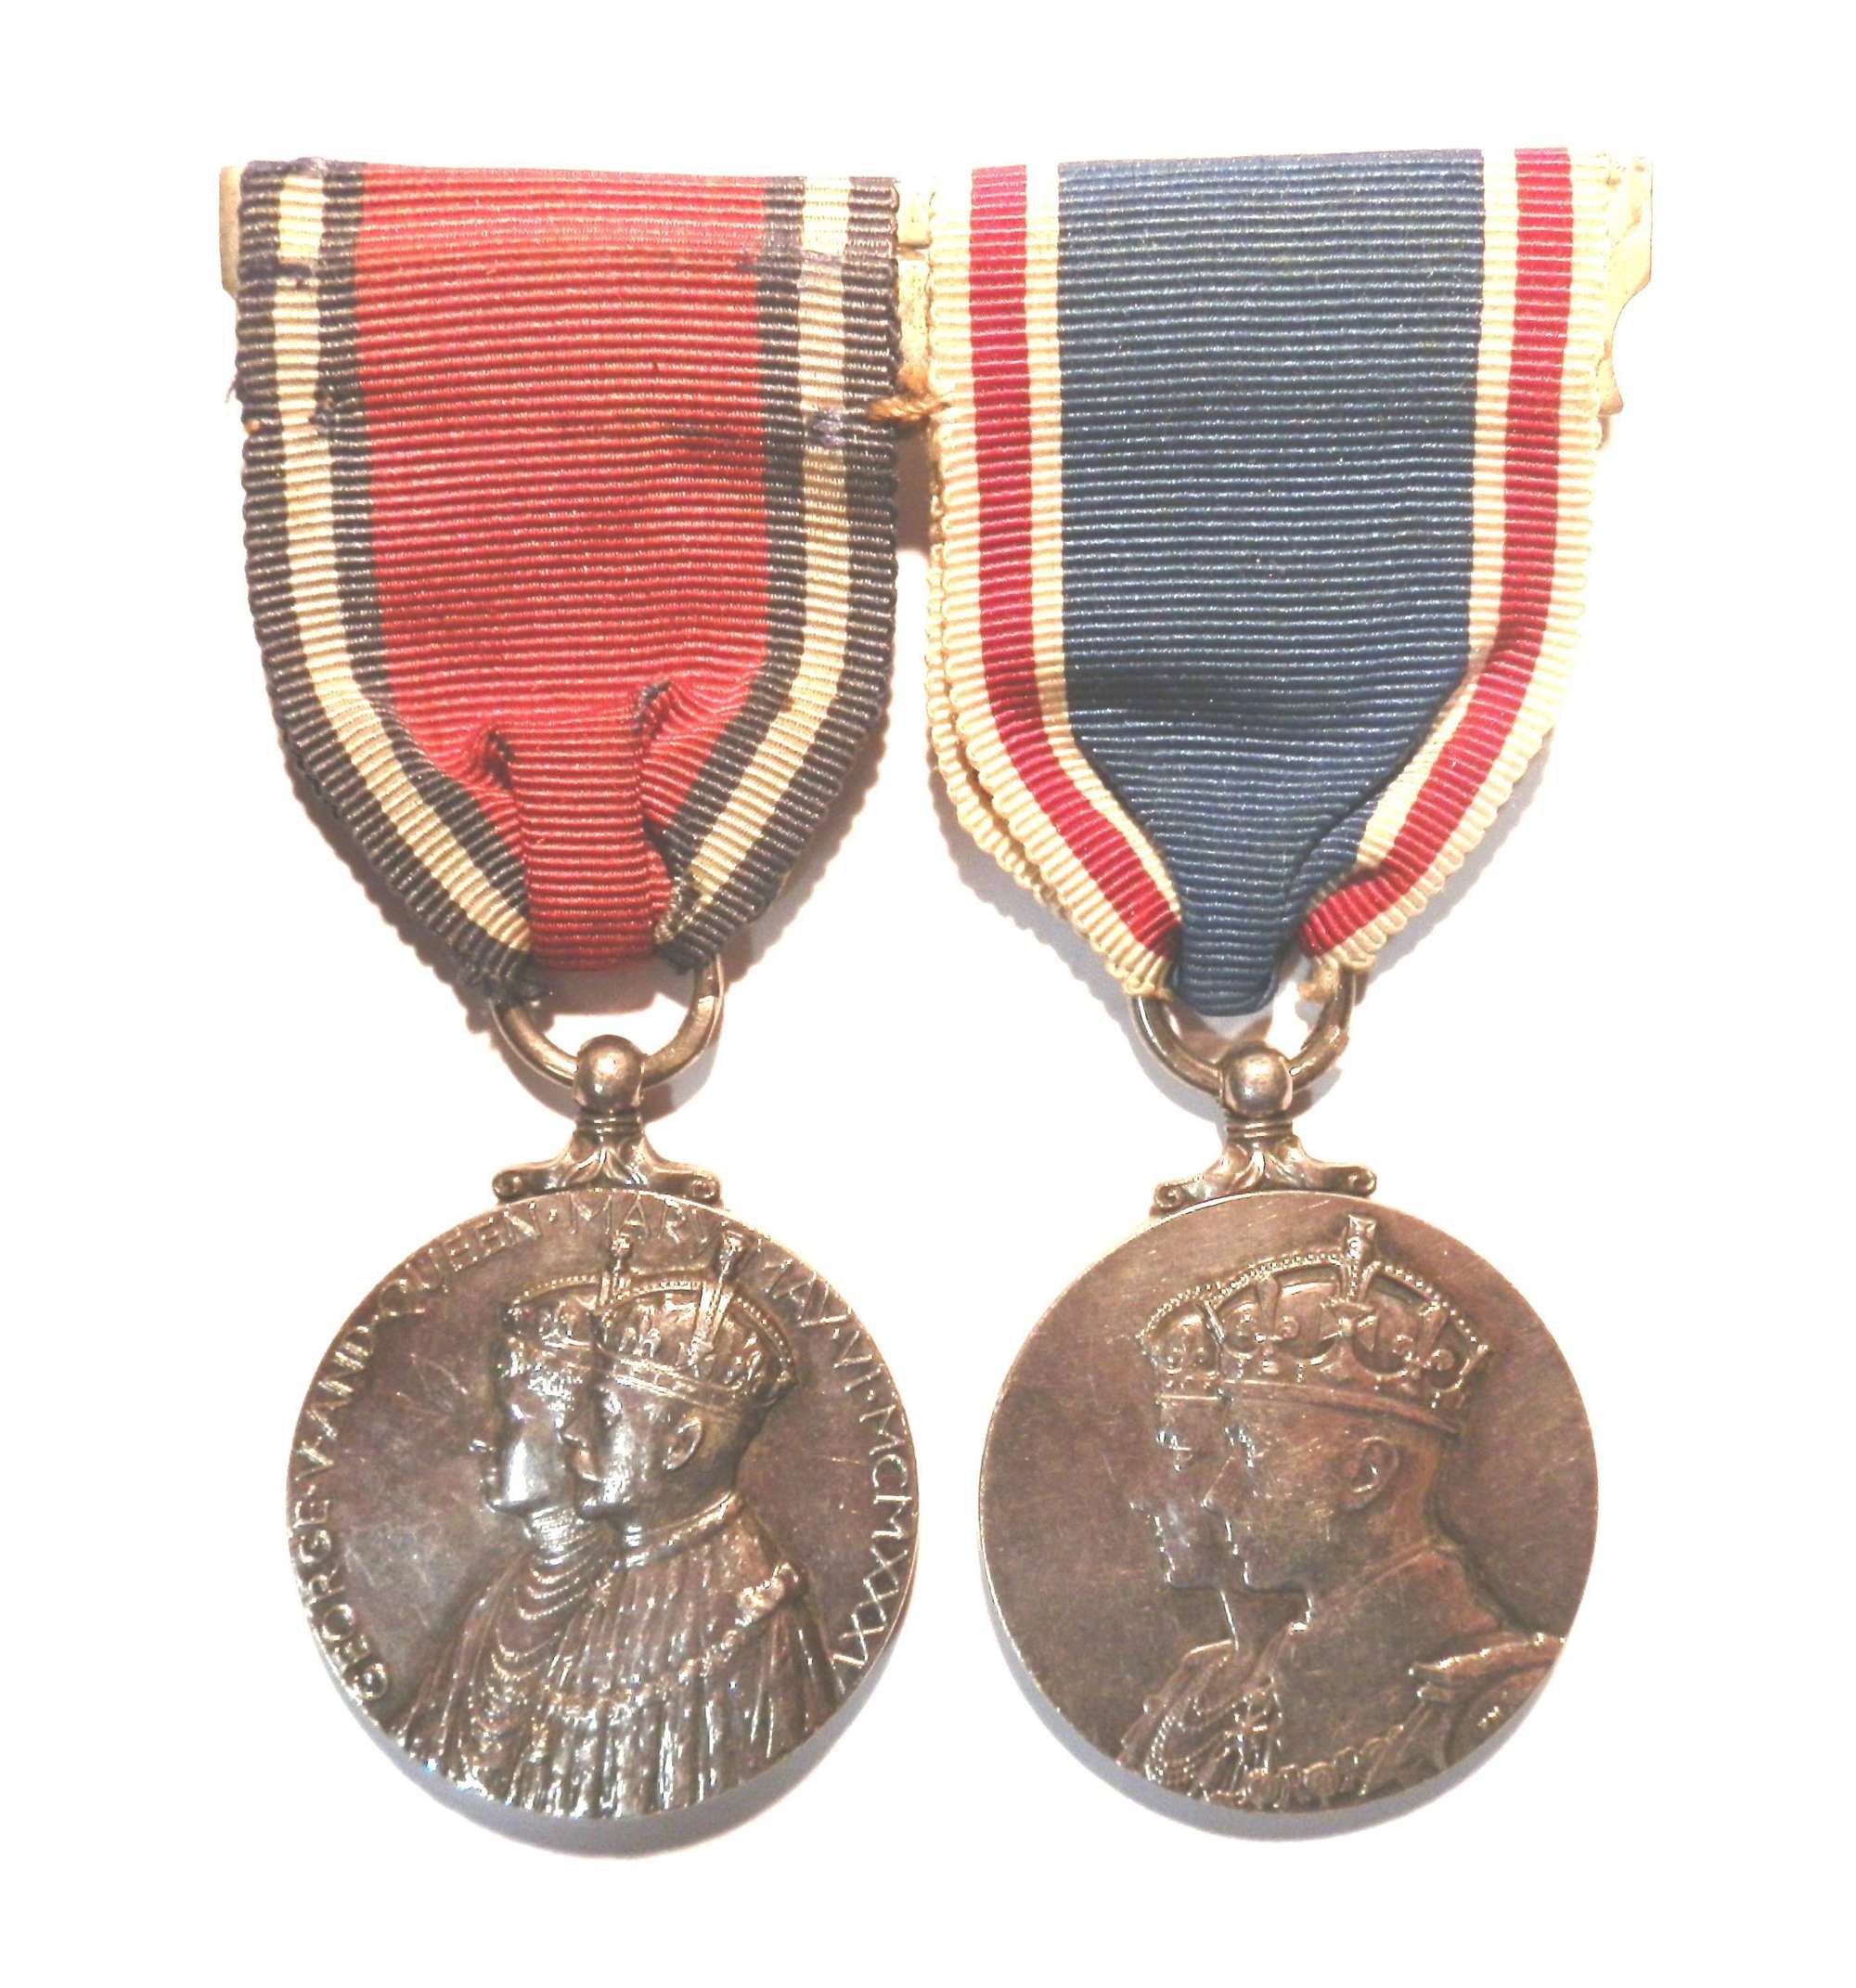 PAIR. Jubilee Medal 1935 and Coronation Medal 1937.